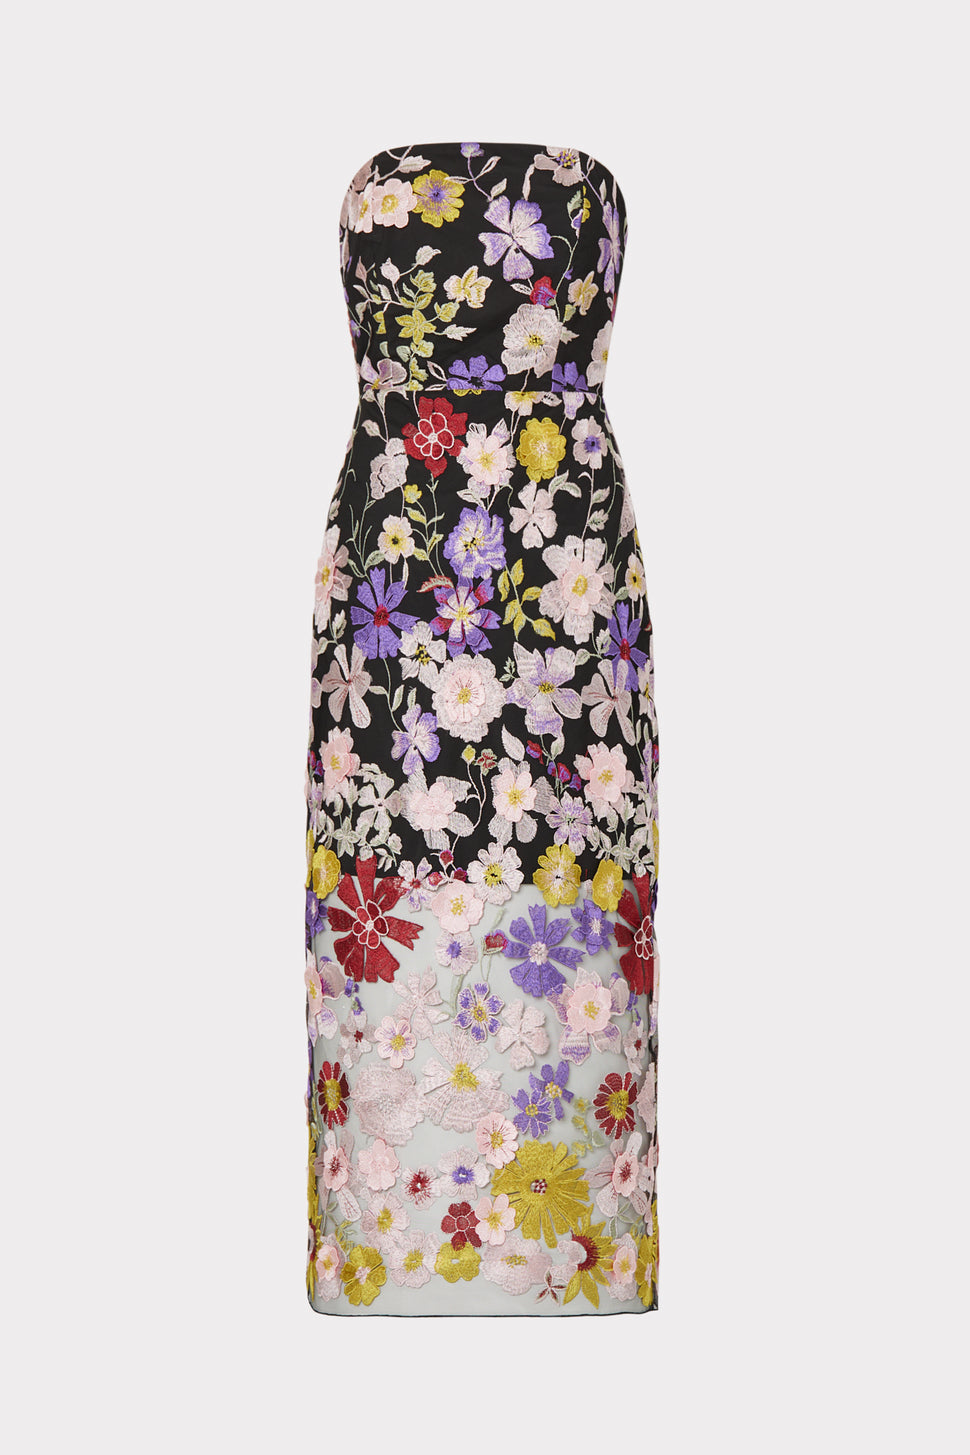 Buy Floral Embroidery Sheer Mesh Slip - Order Slips online